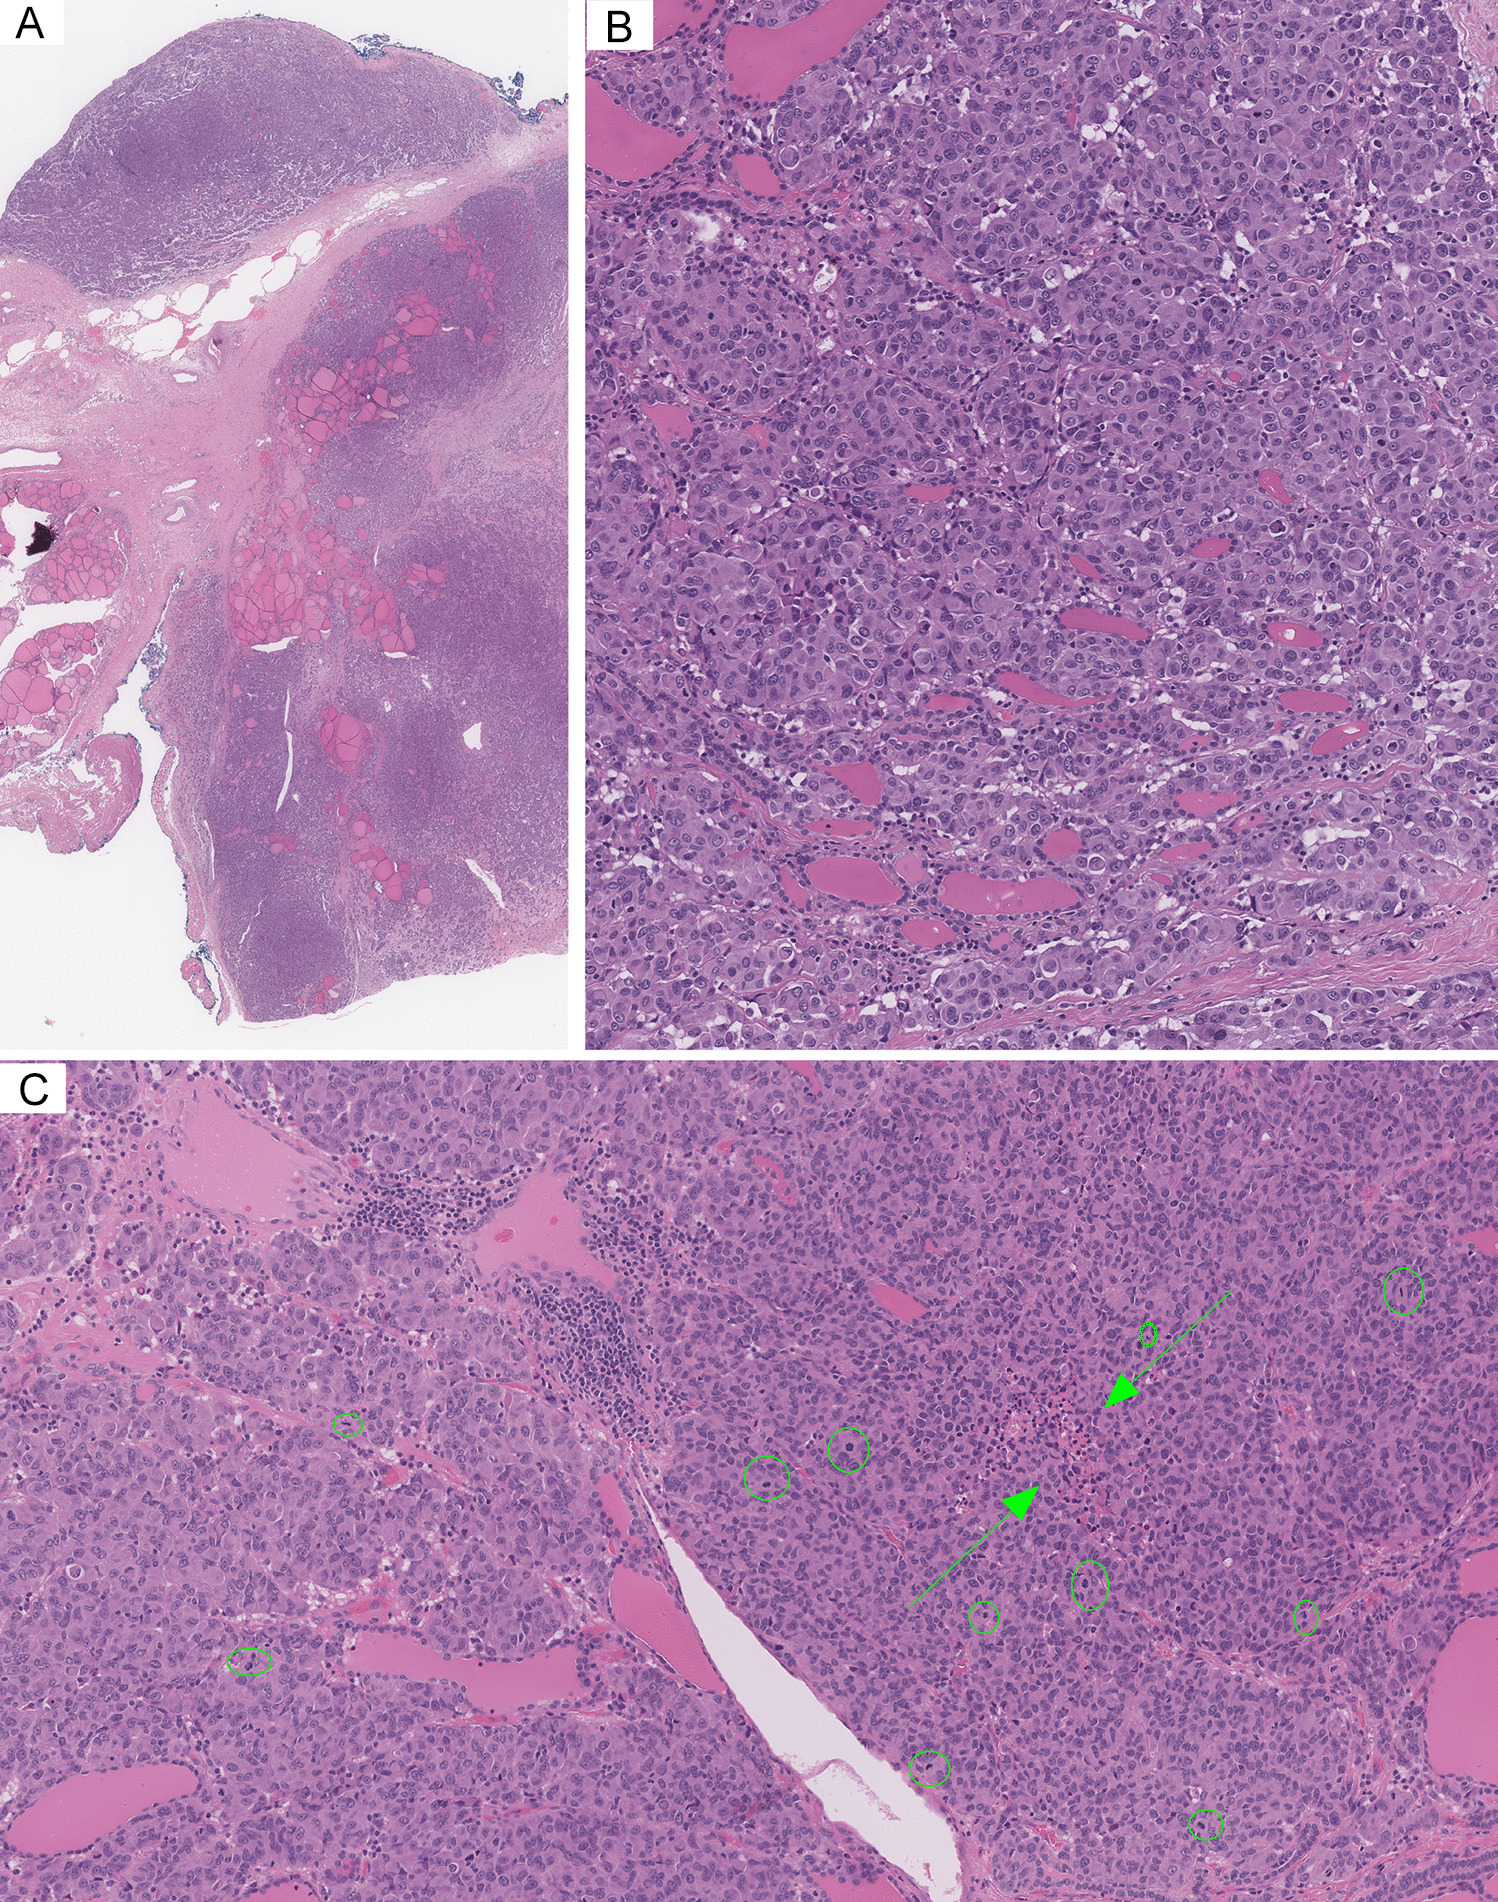 Uncommon Mimicker of a High-Grade Thyroid Carcinoma: Solitary Thyroid Metastasis of Gastrointestinal Stromal Tumor (GIST)